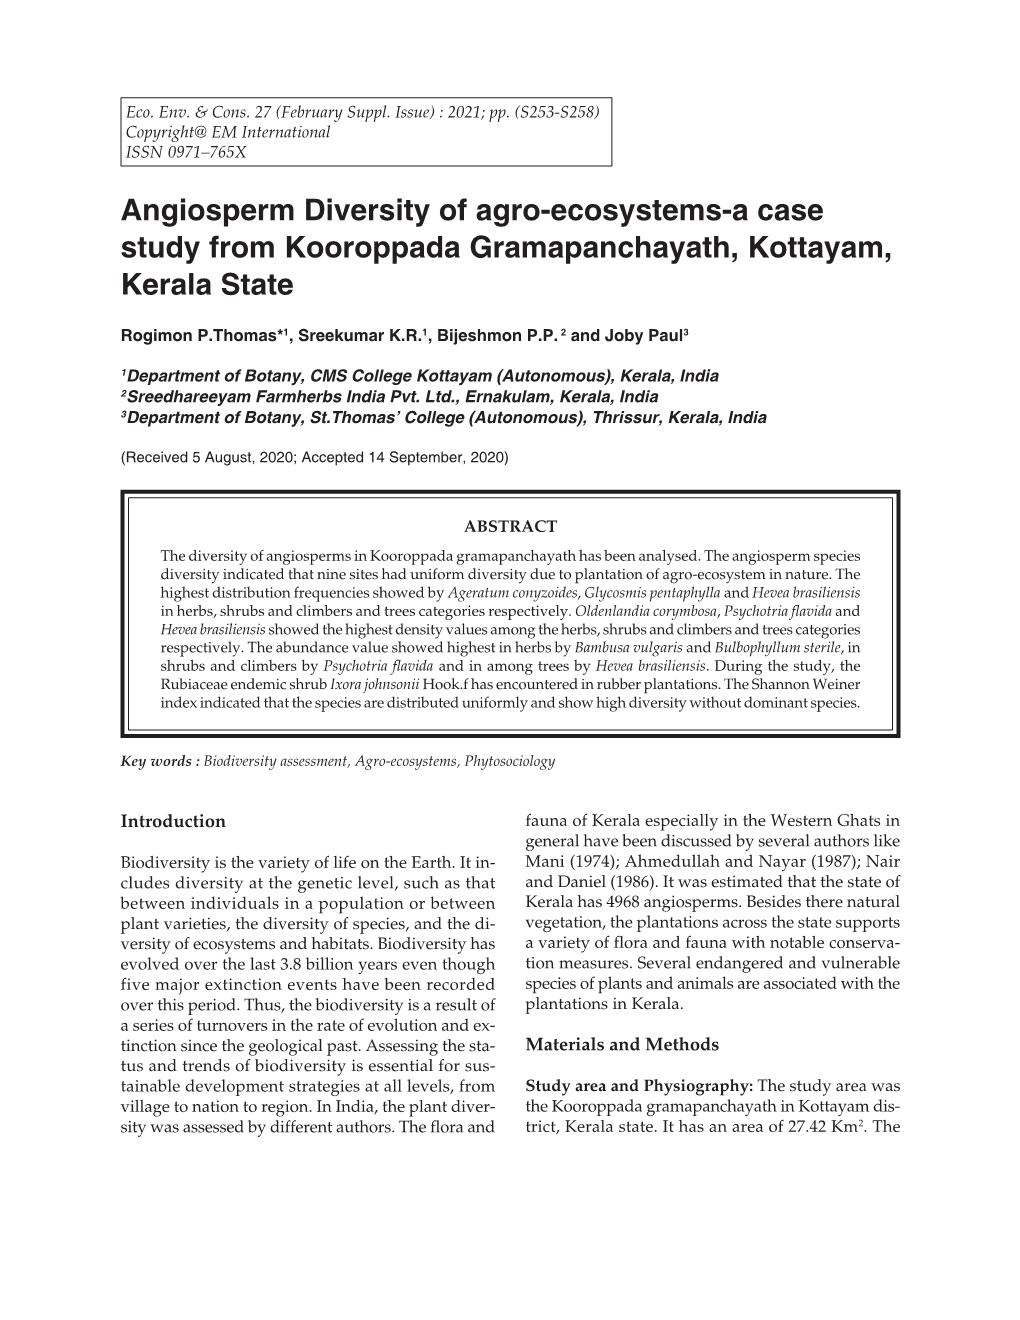 Angiosperm Diversity of Agro-Ecosystems-A Case Study from Kooroppada Gramapanchayath, Kottayam, Kerala State